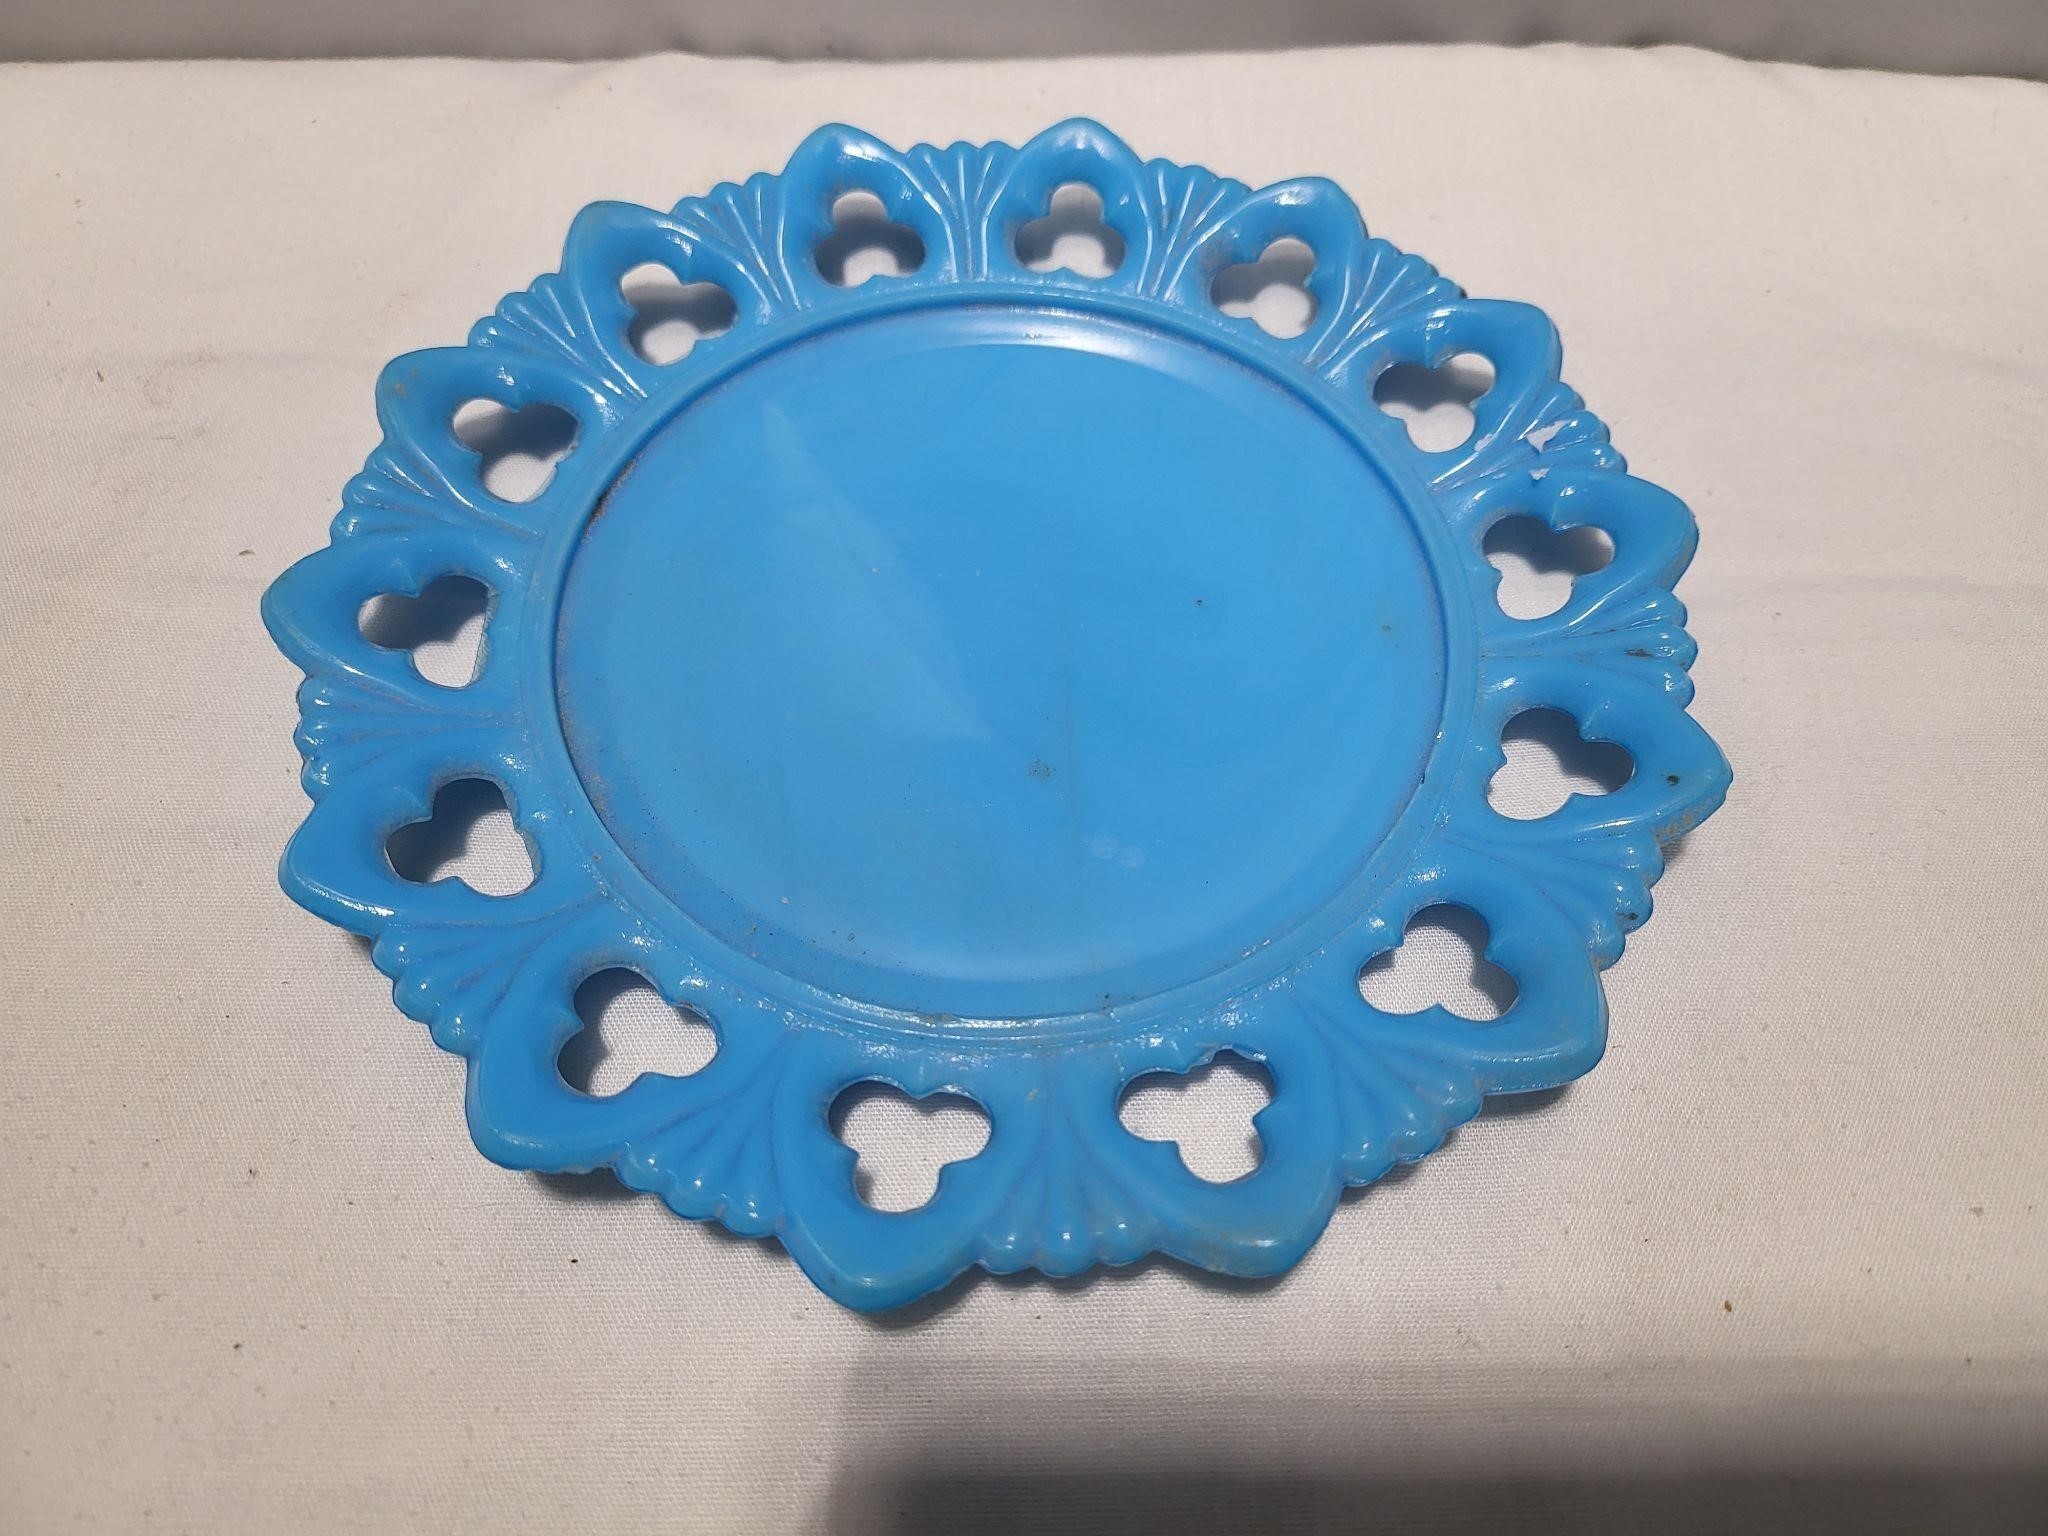 Blue glass plate